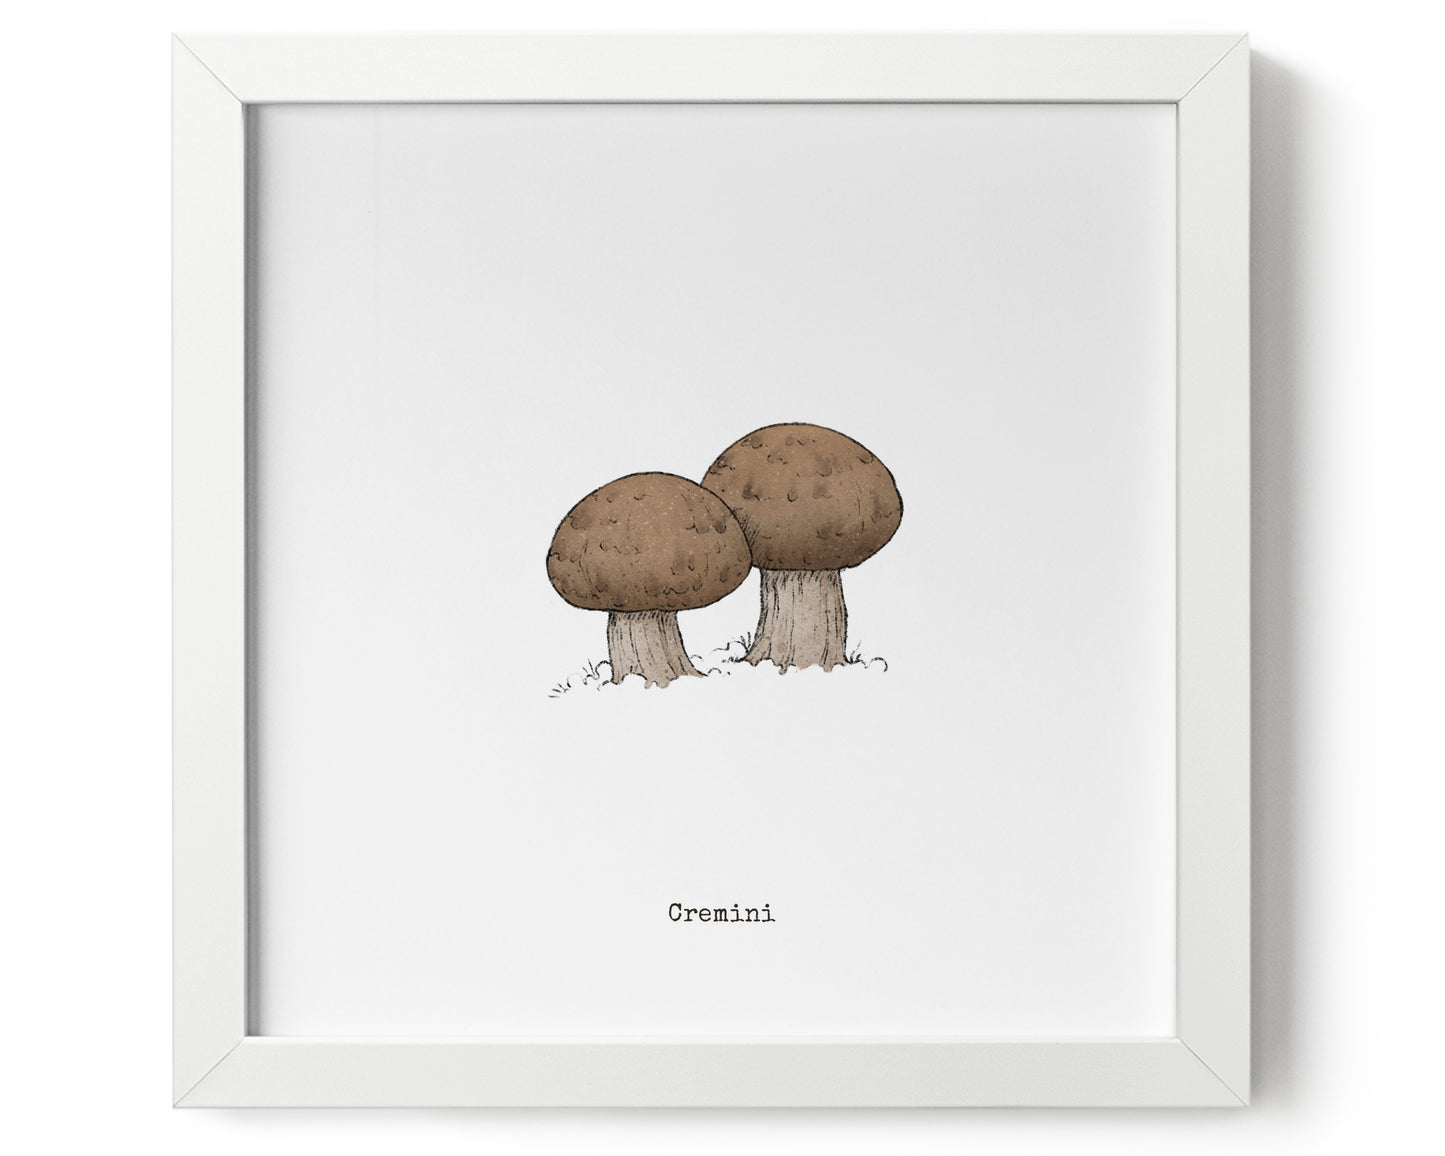 "Cremini Mushroom" by Catherine Hébert - Cremini Mushroom Art Print - 9"x9" size